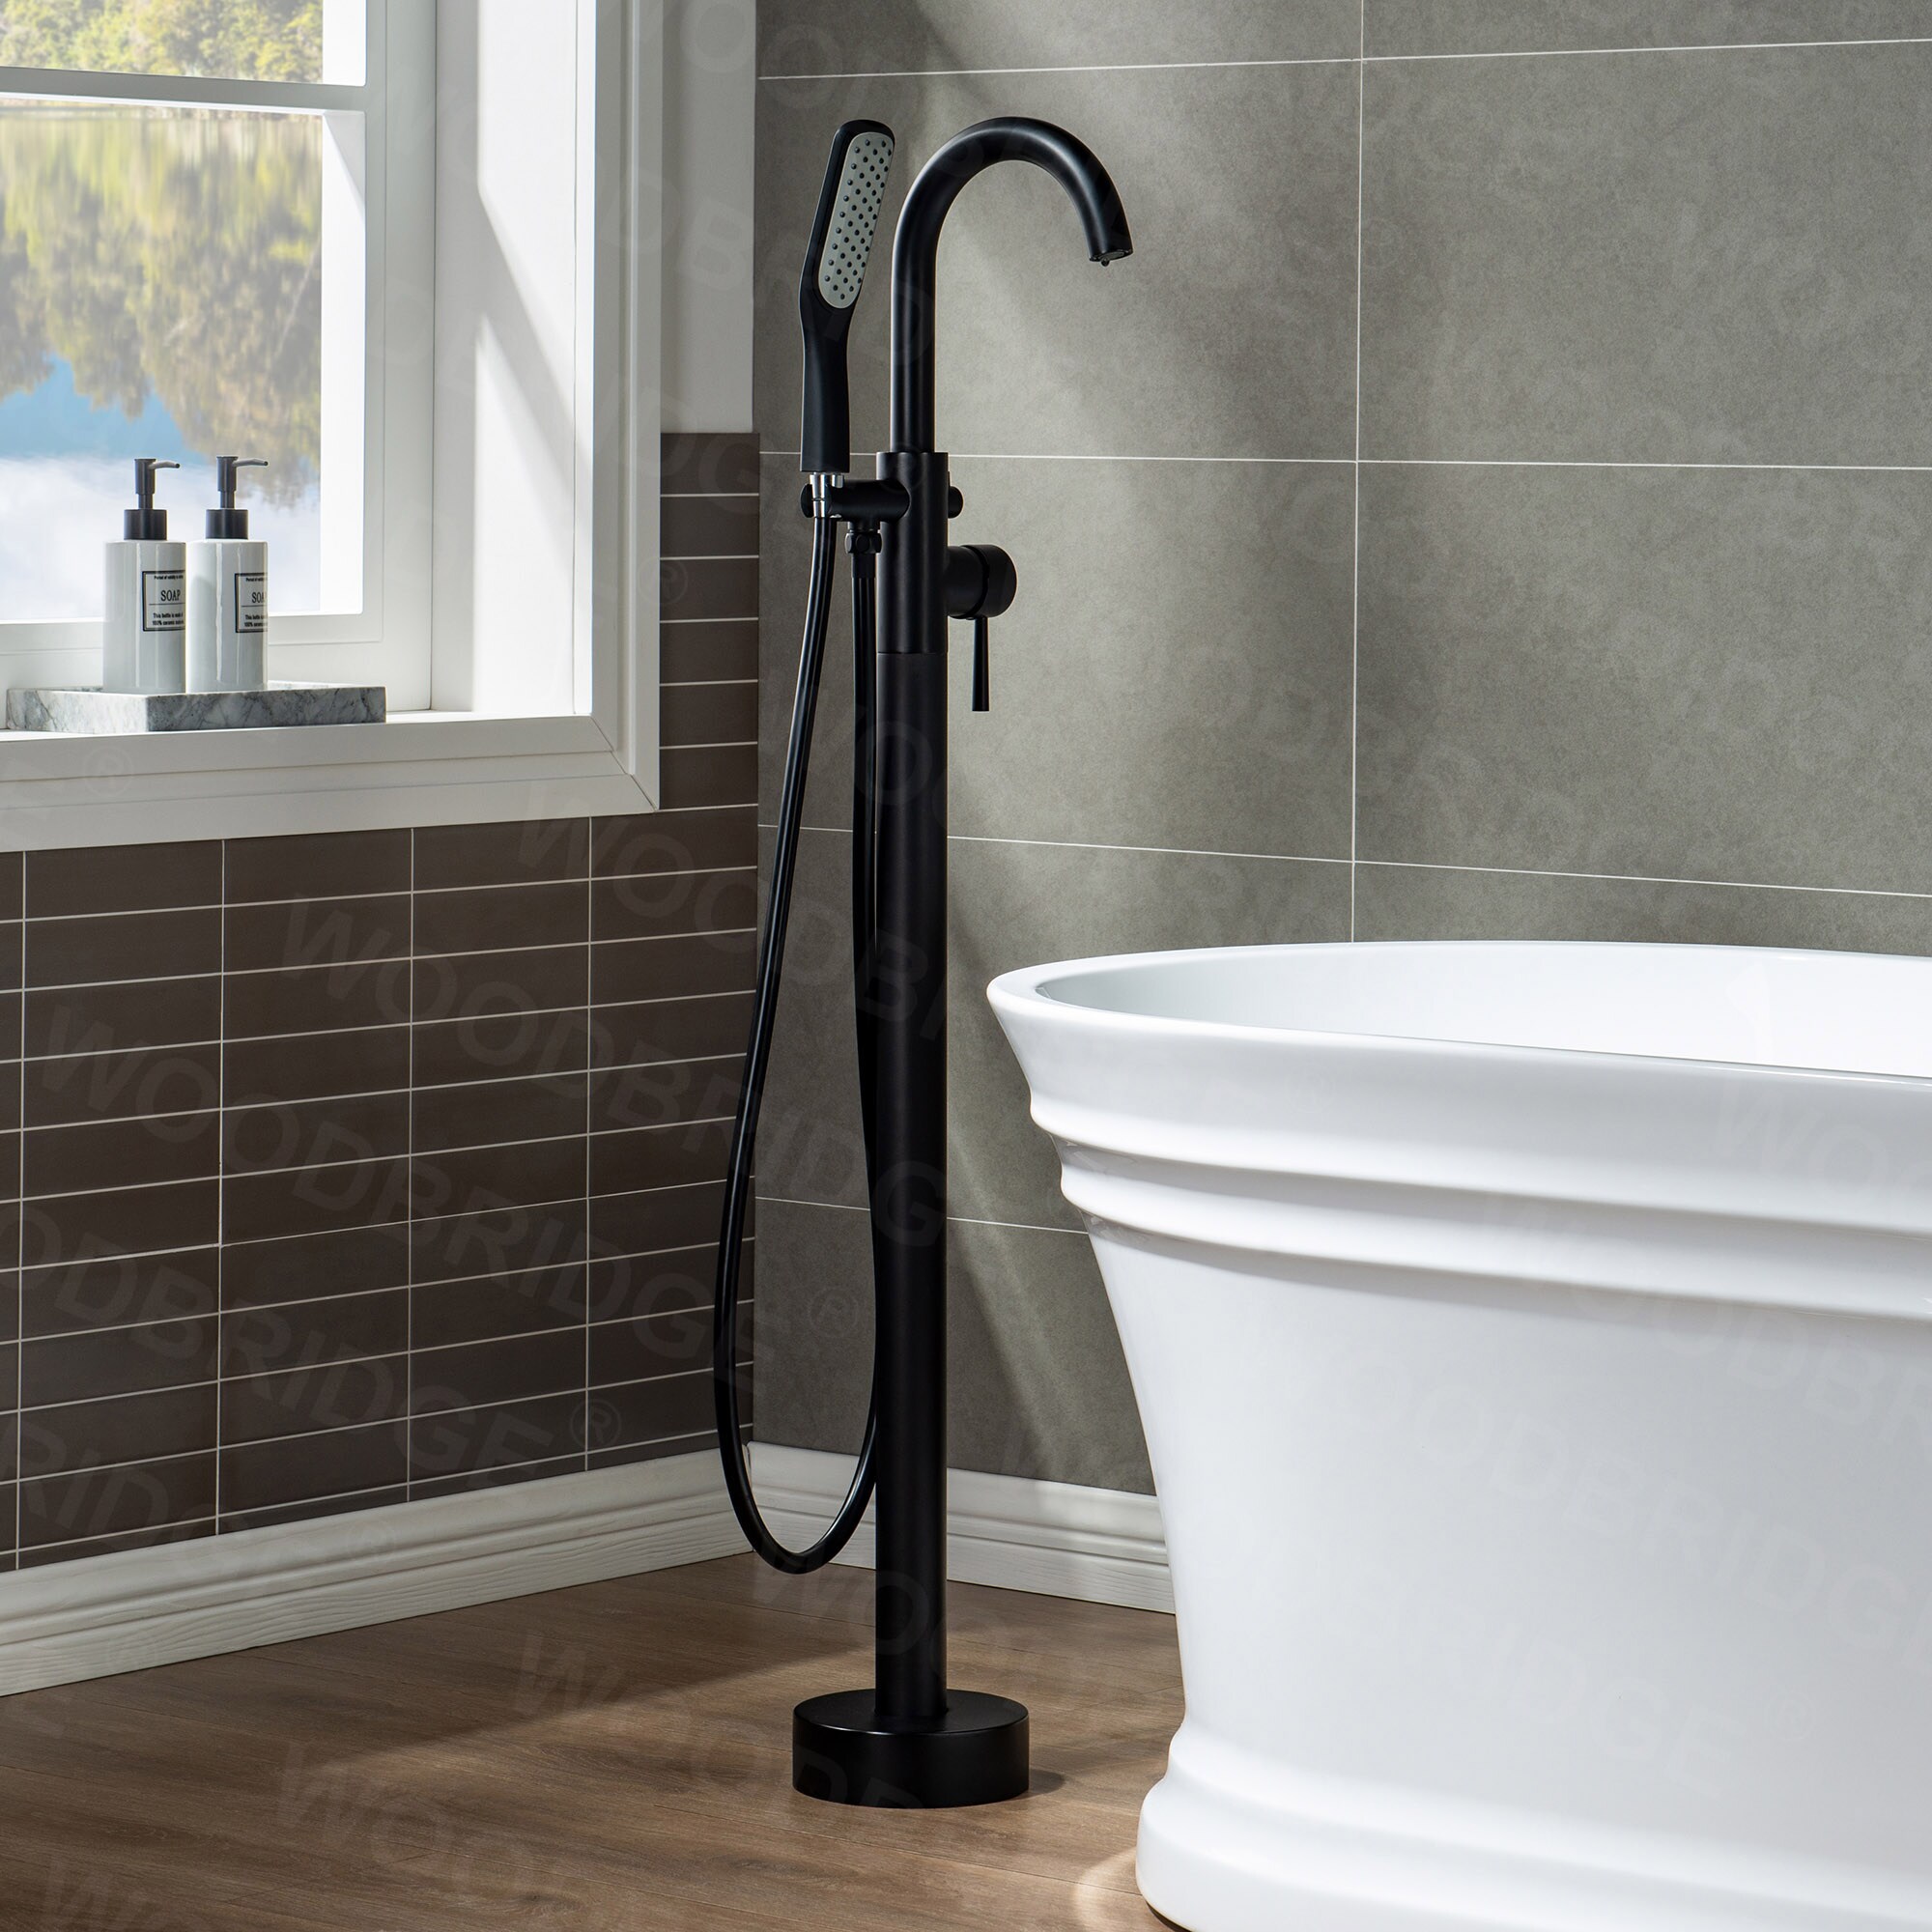 Serie 11 Low Pressure Bathroom Deck Mounted Bath Filler Shower Tap Mixer Legs 